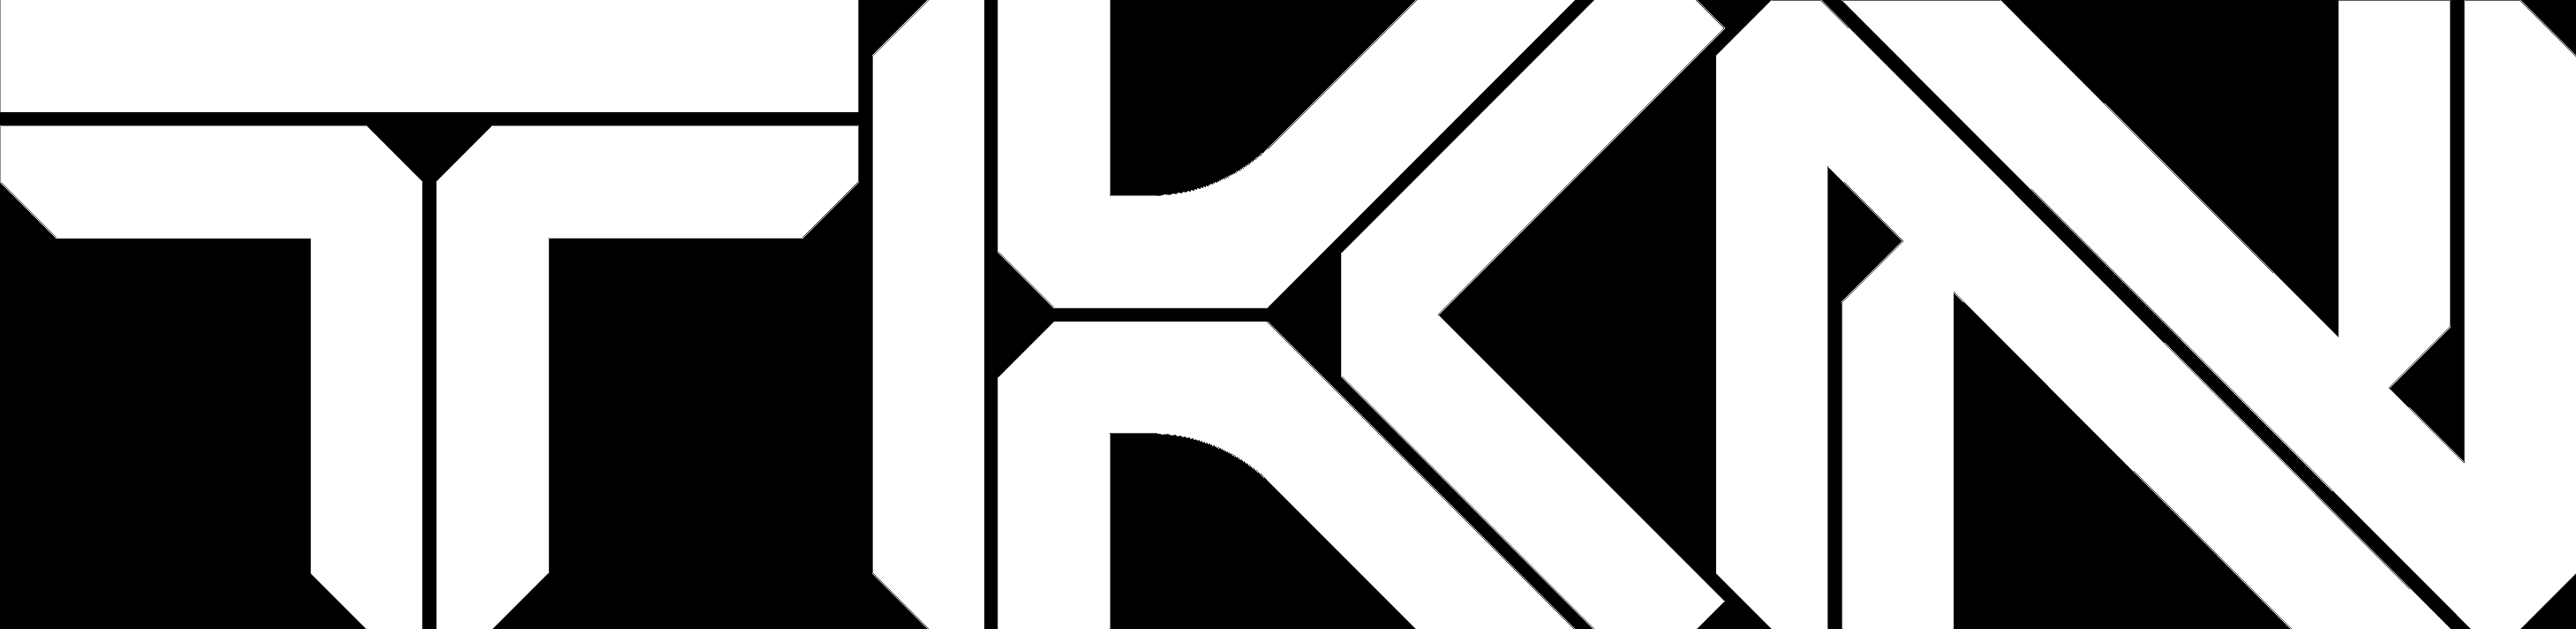 TKN logo